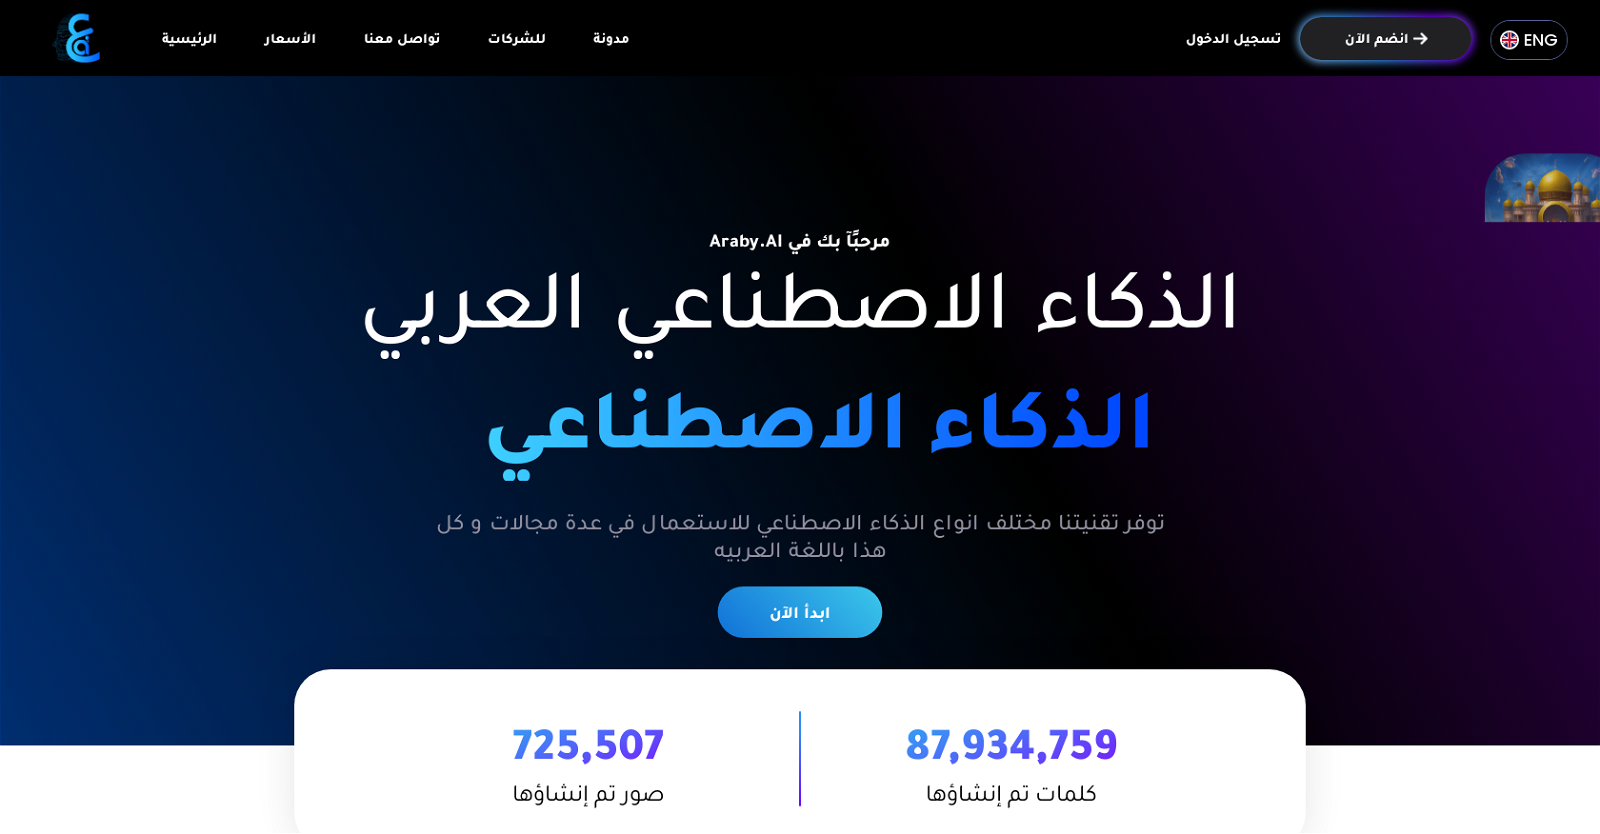 Araby website